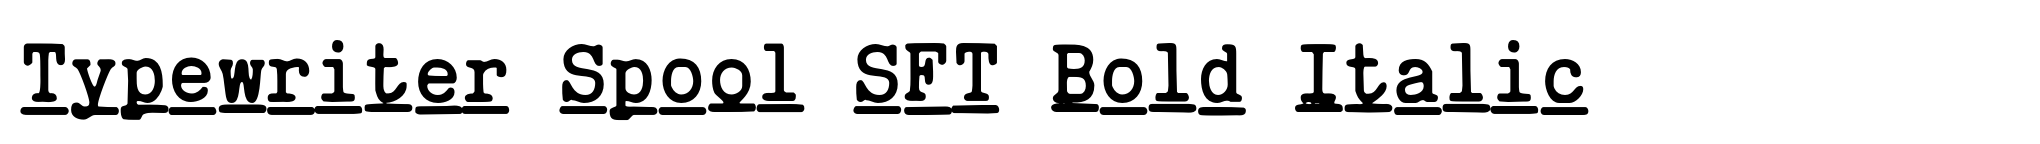 Typewriter Spool SFT Bold Italic image